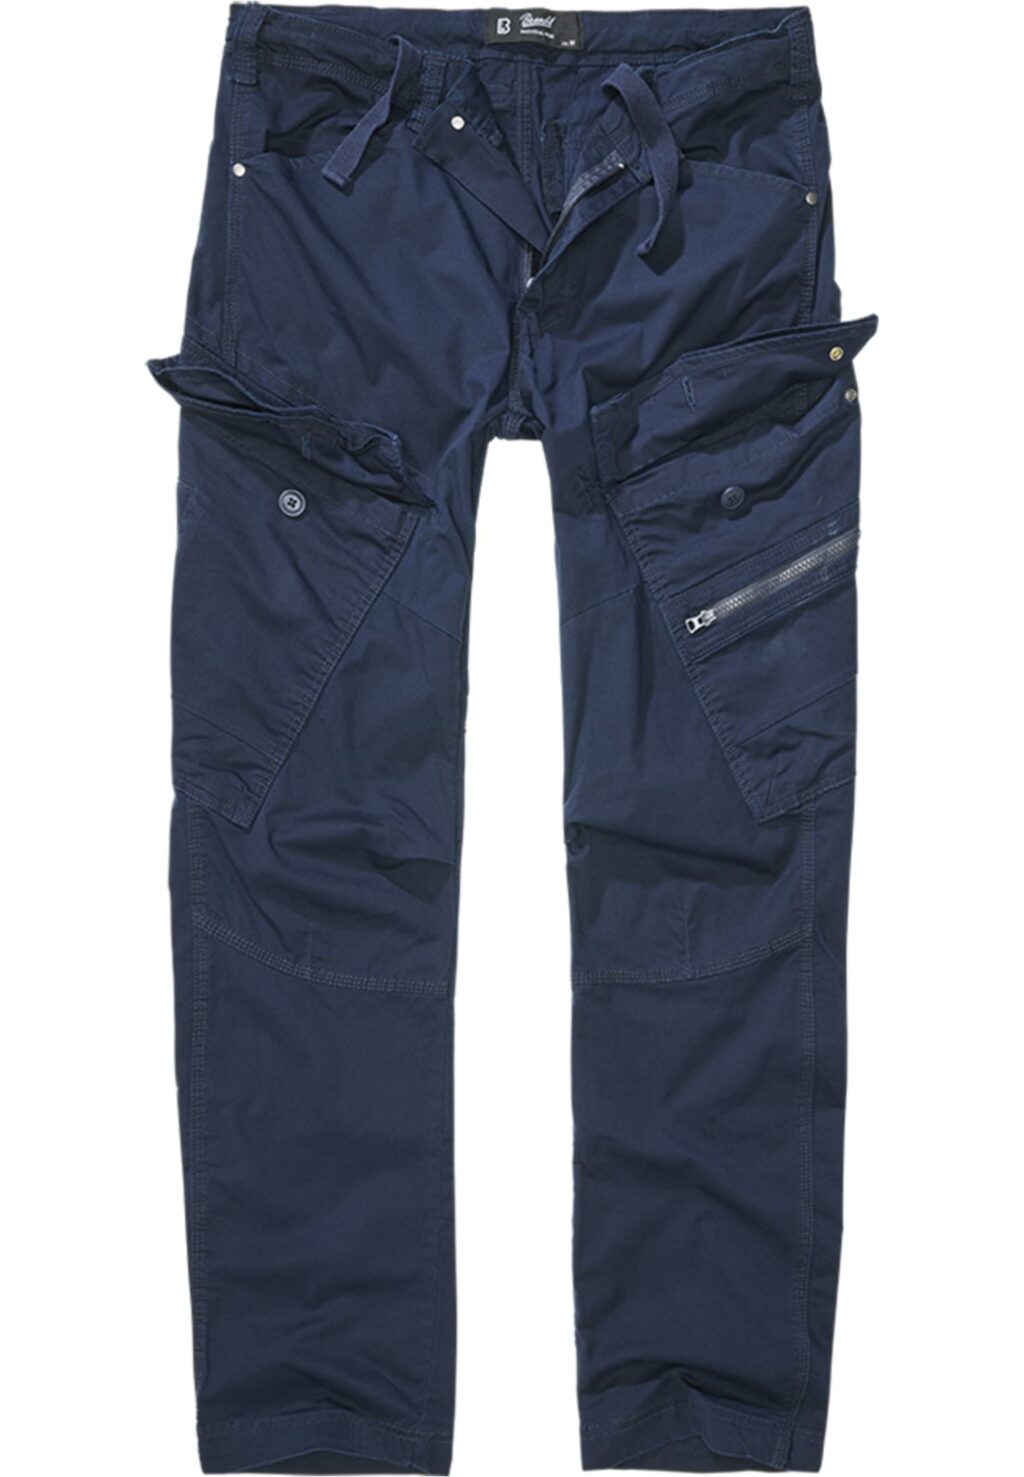 Brandit Adven Slim Fit Cargo Pants navy BD9470